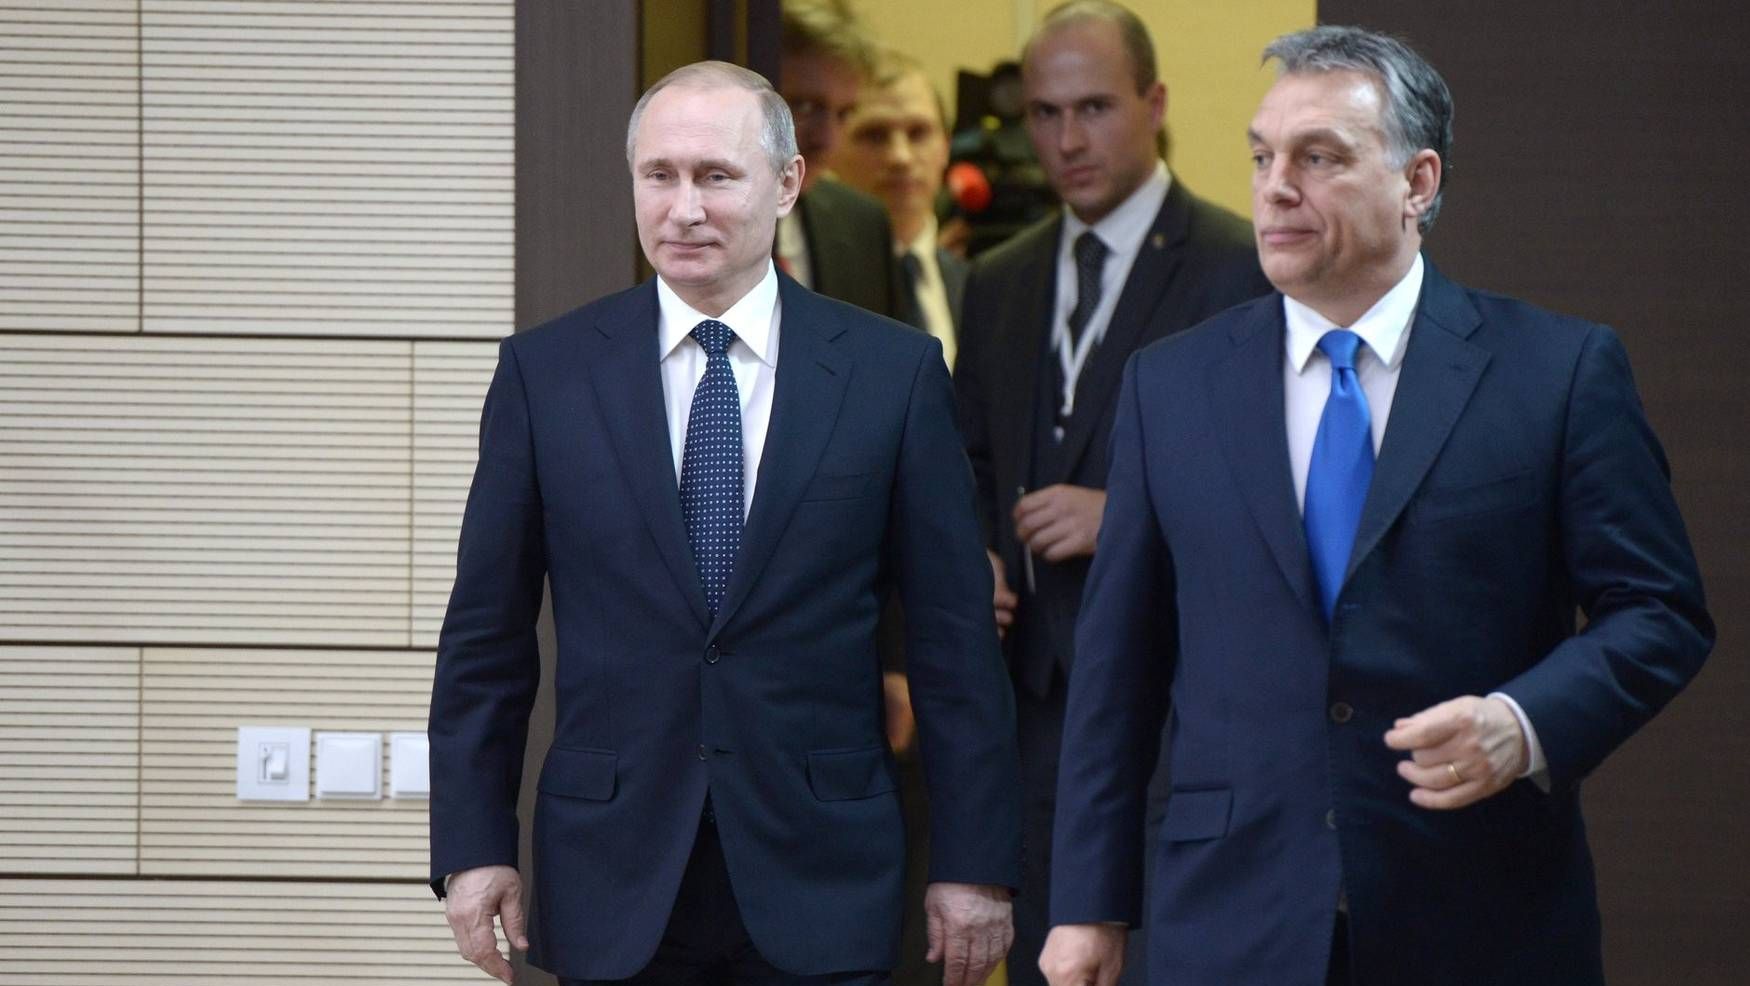 Image by kremlin.ru Vladimir Putin and Viktor Orban